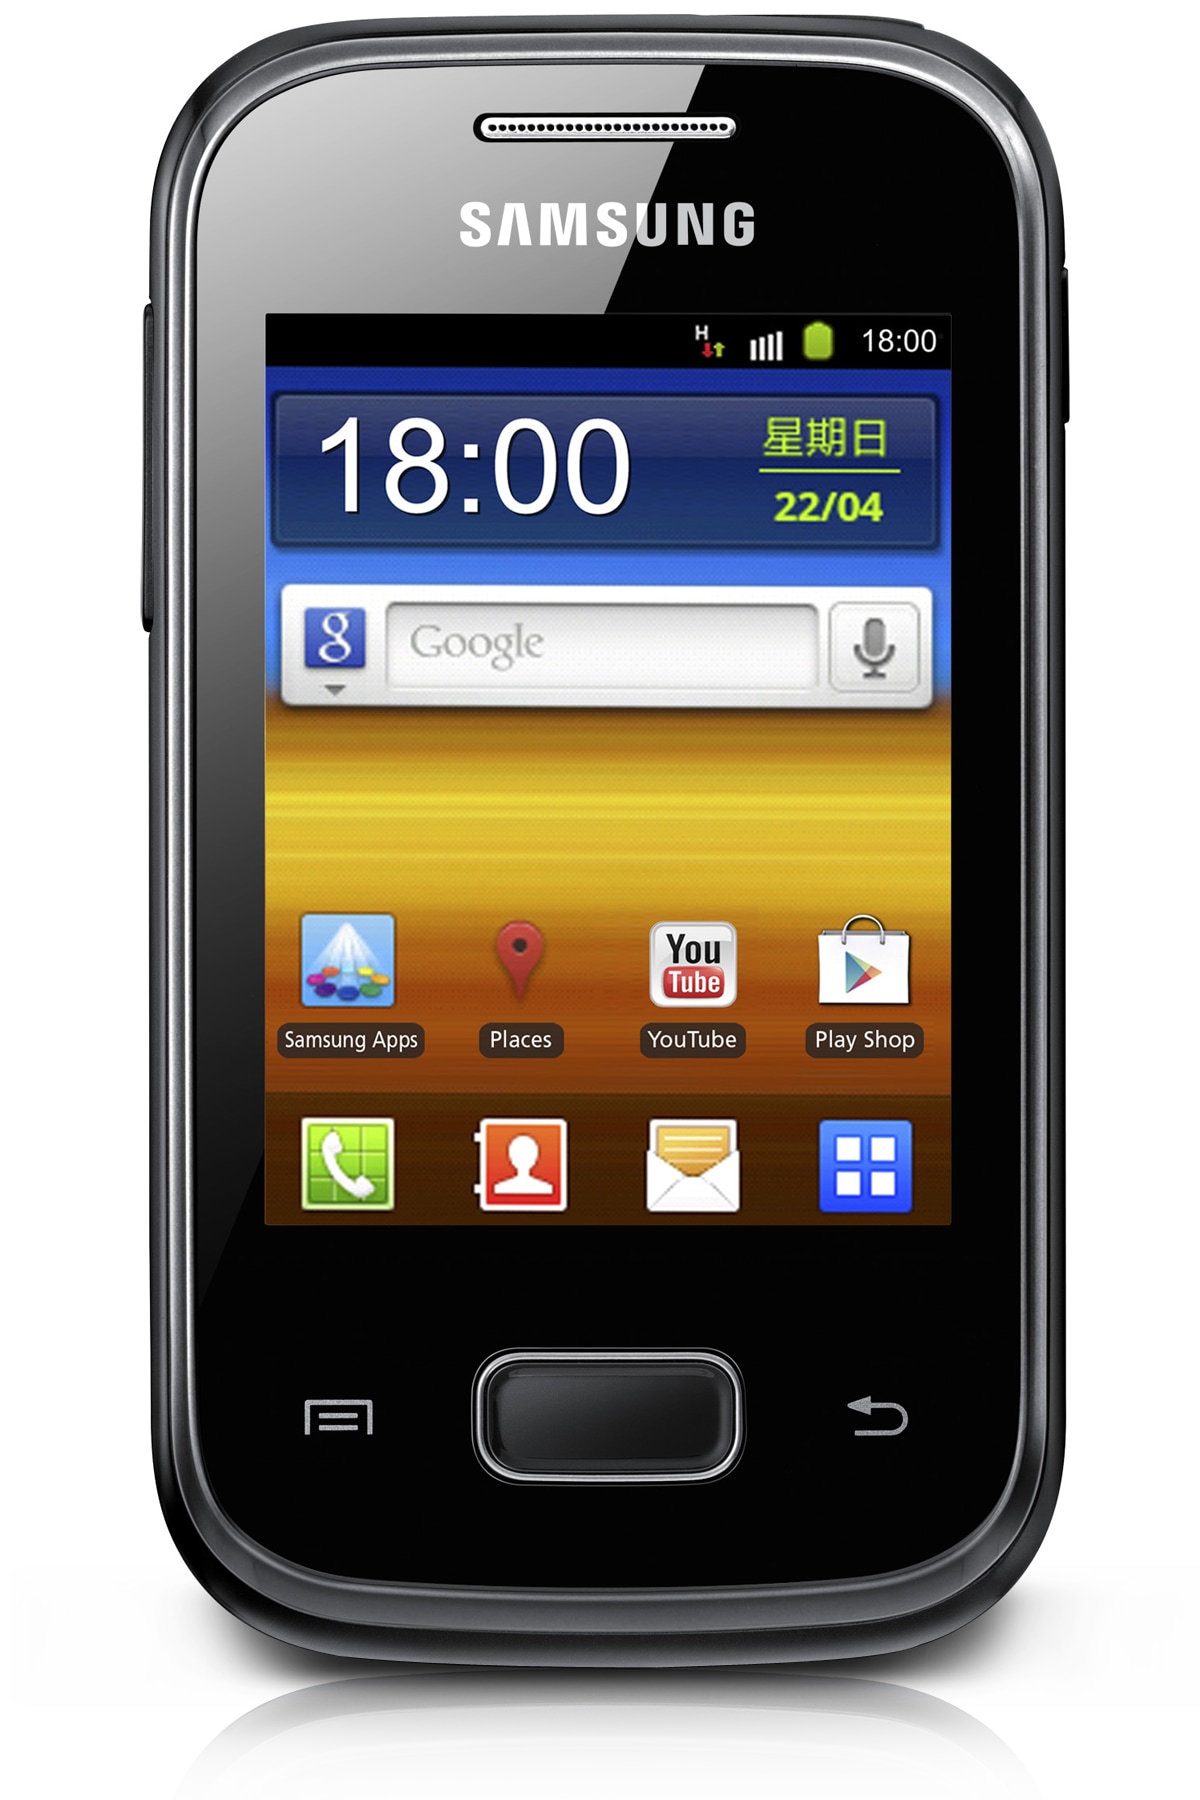 Free Whatsapp Download For Samsung Galaxy Pocket Neo